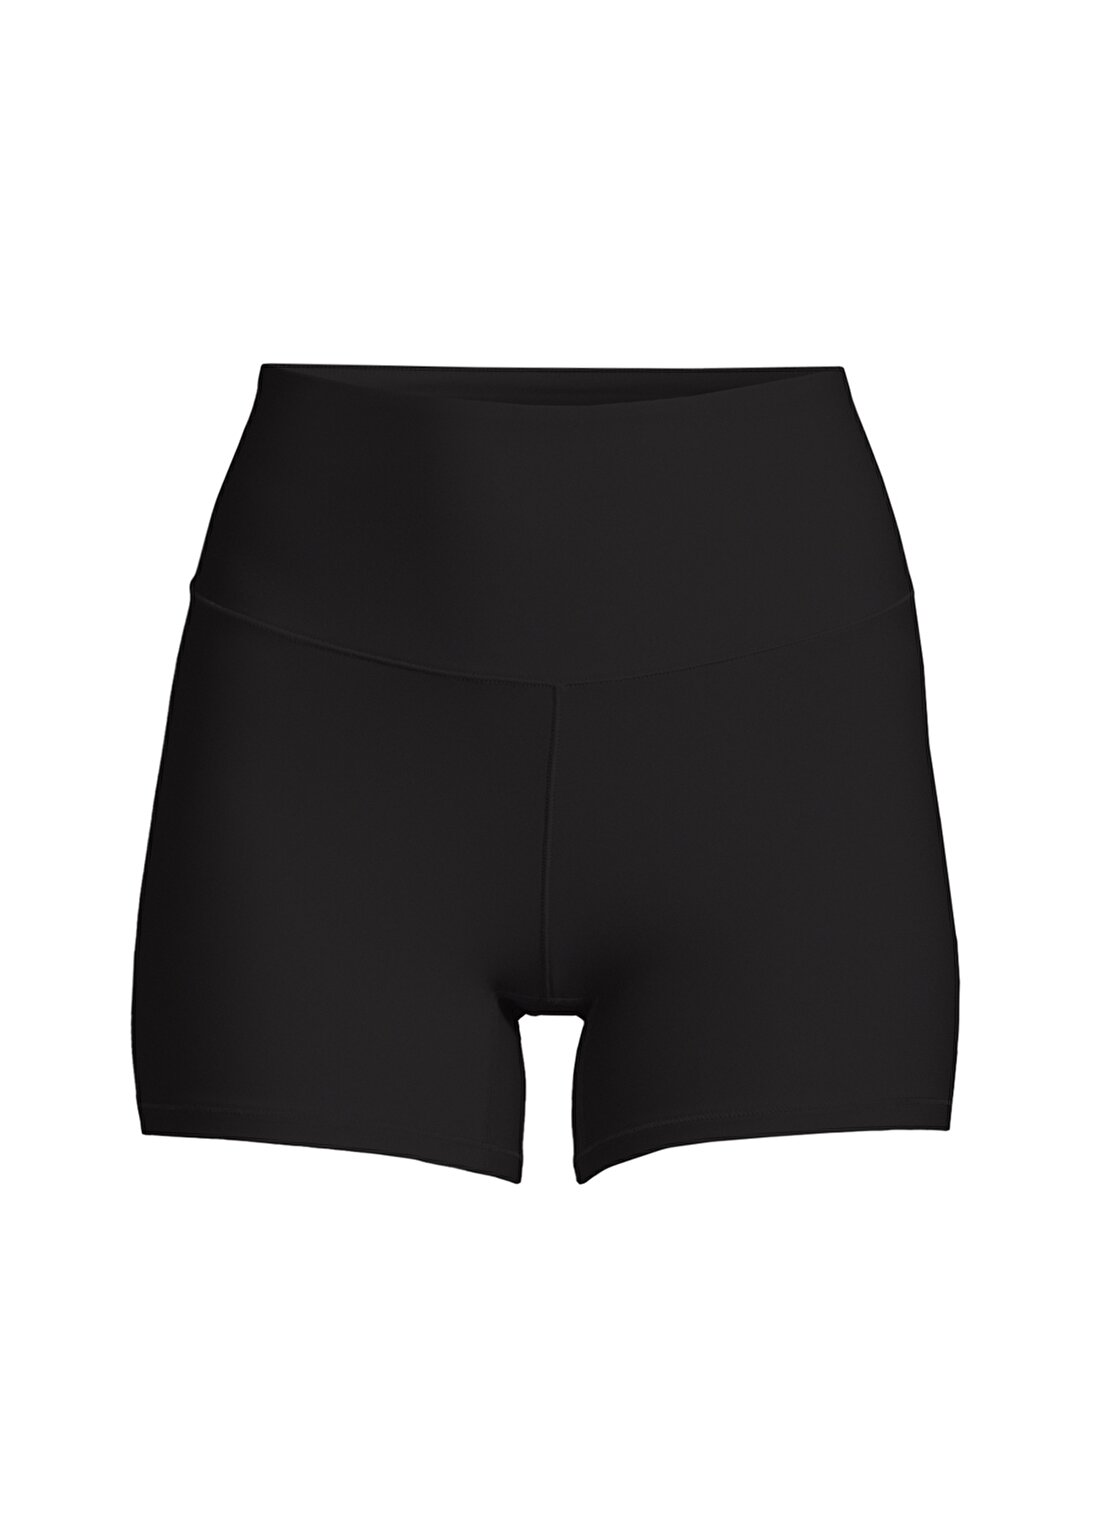 Casall Siyah Kadın Tayt 23149-901 Ultra High Waist Hot Pant